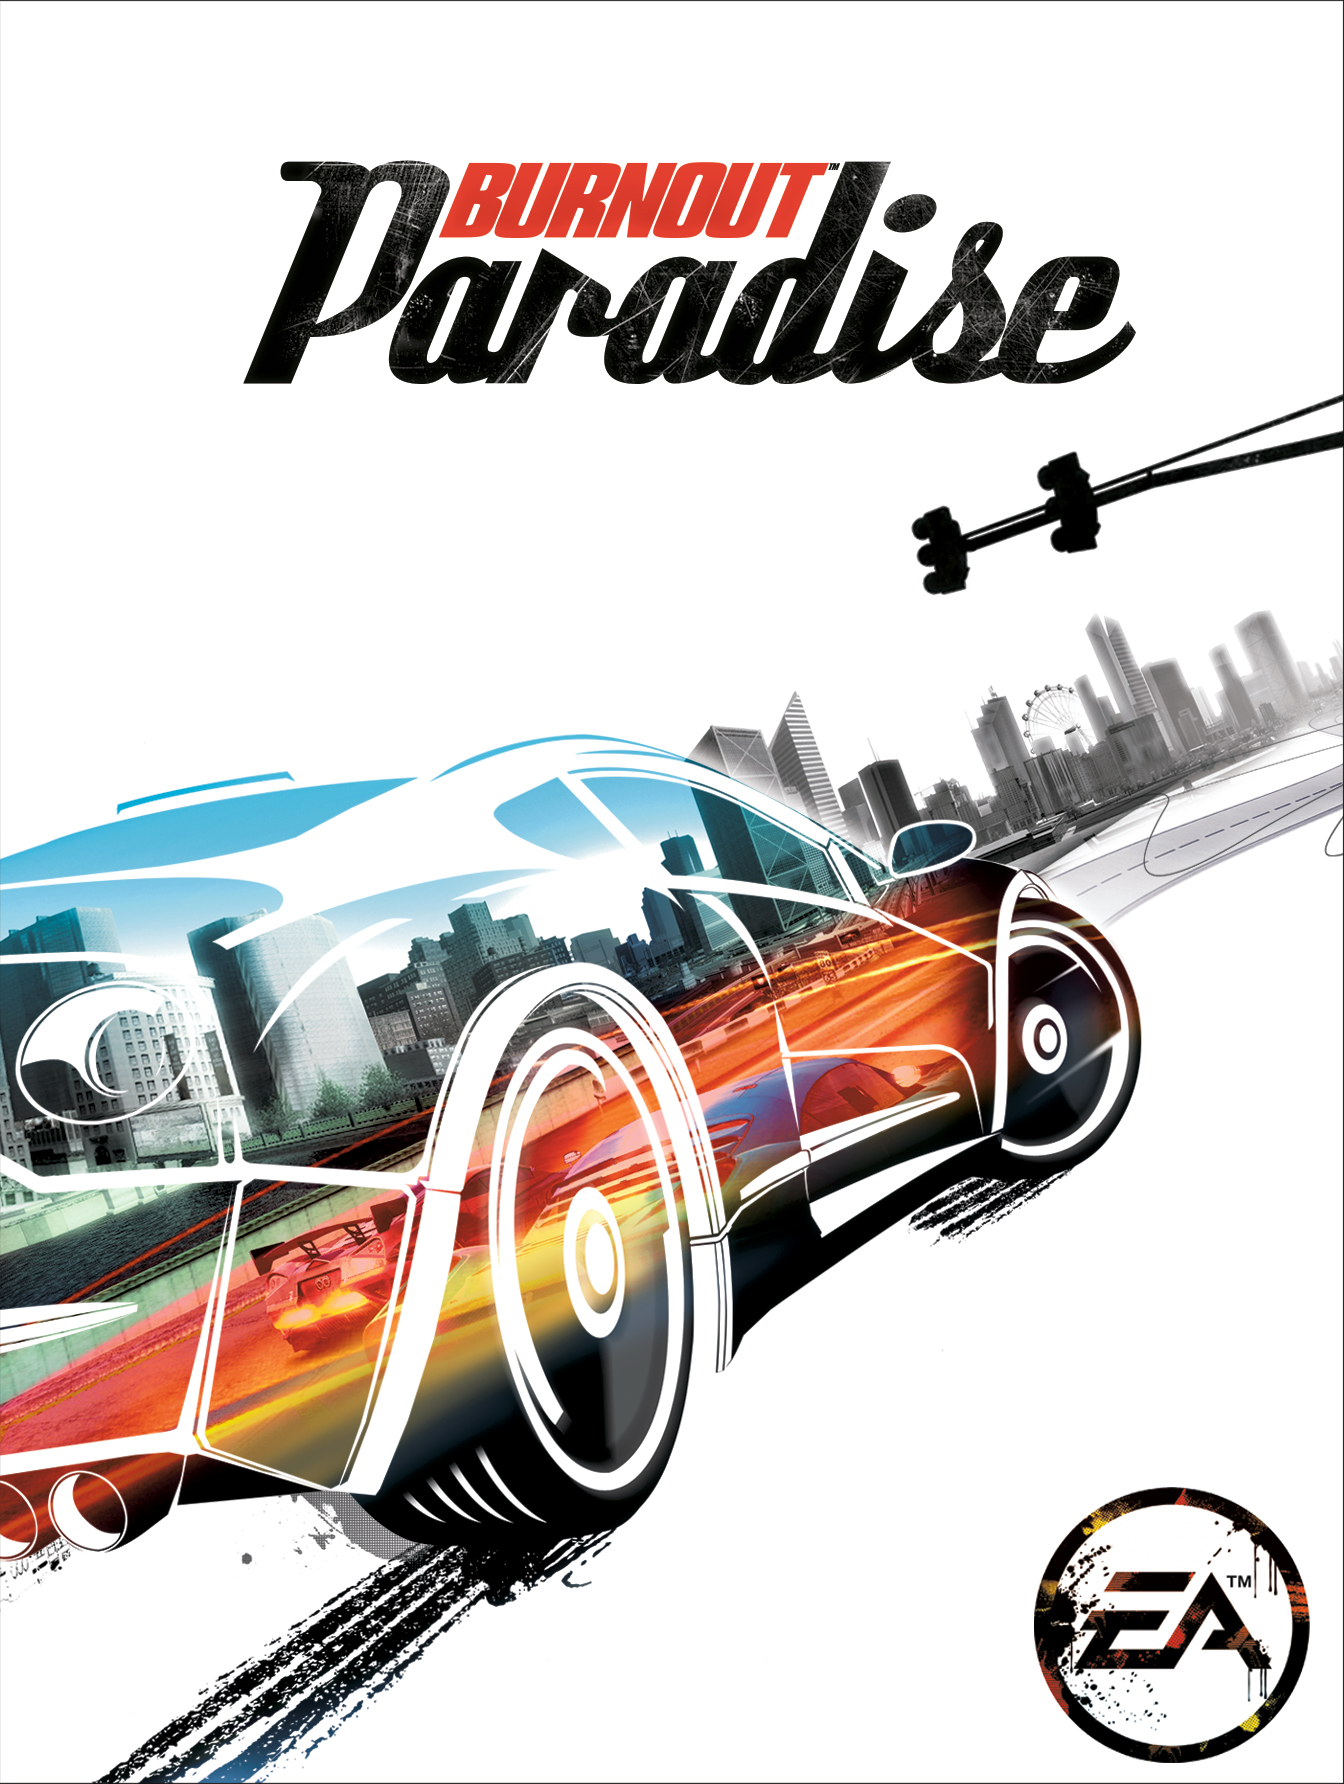 Burnout paradise mac free download 32-bit